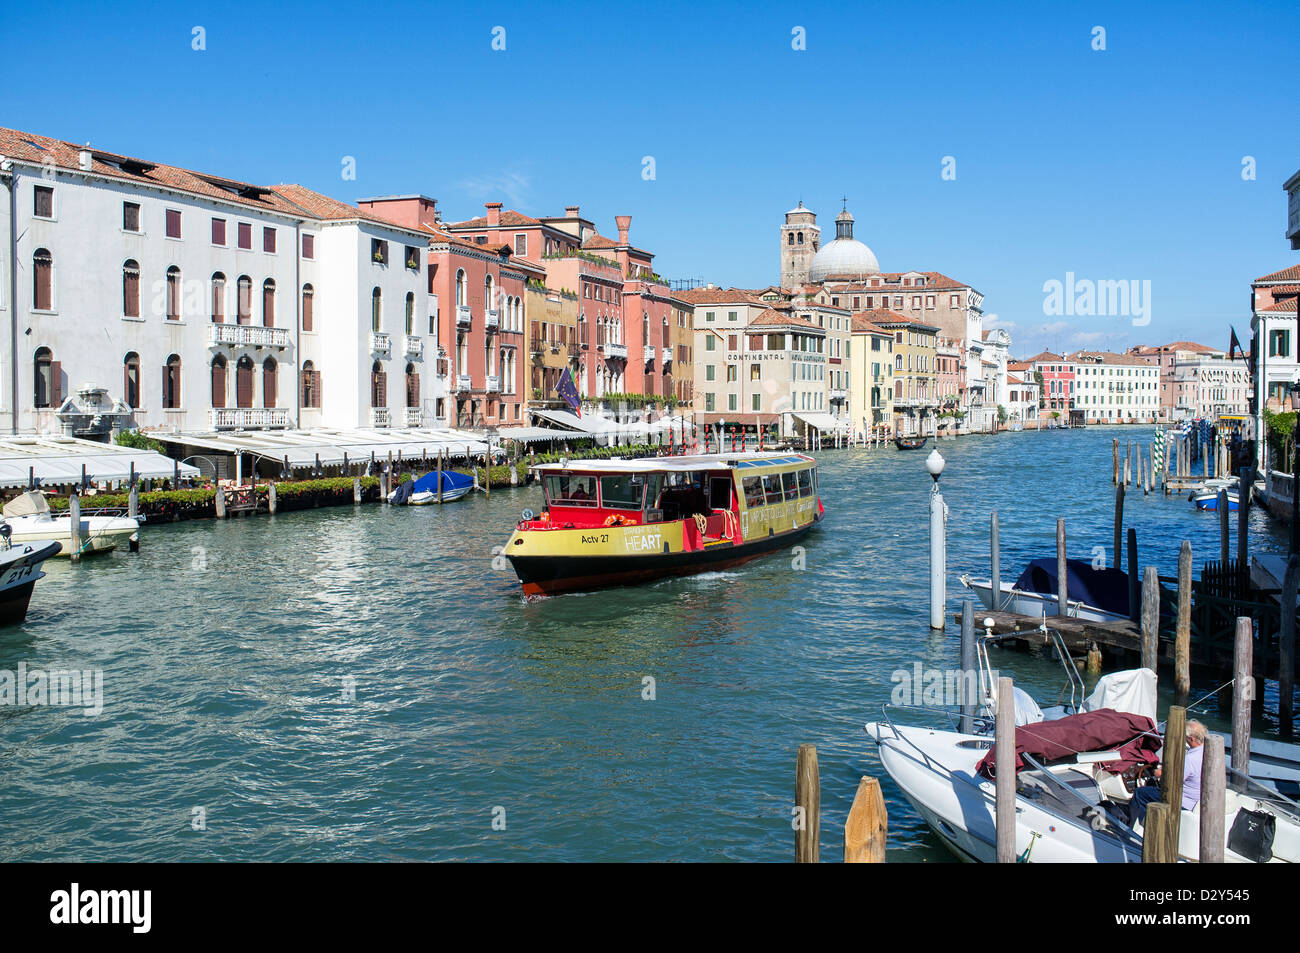 Wasserbus oder Vaporetto auf dem Canal Grande Venedig Stockfoto